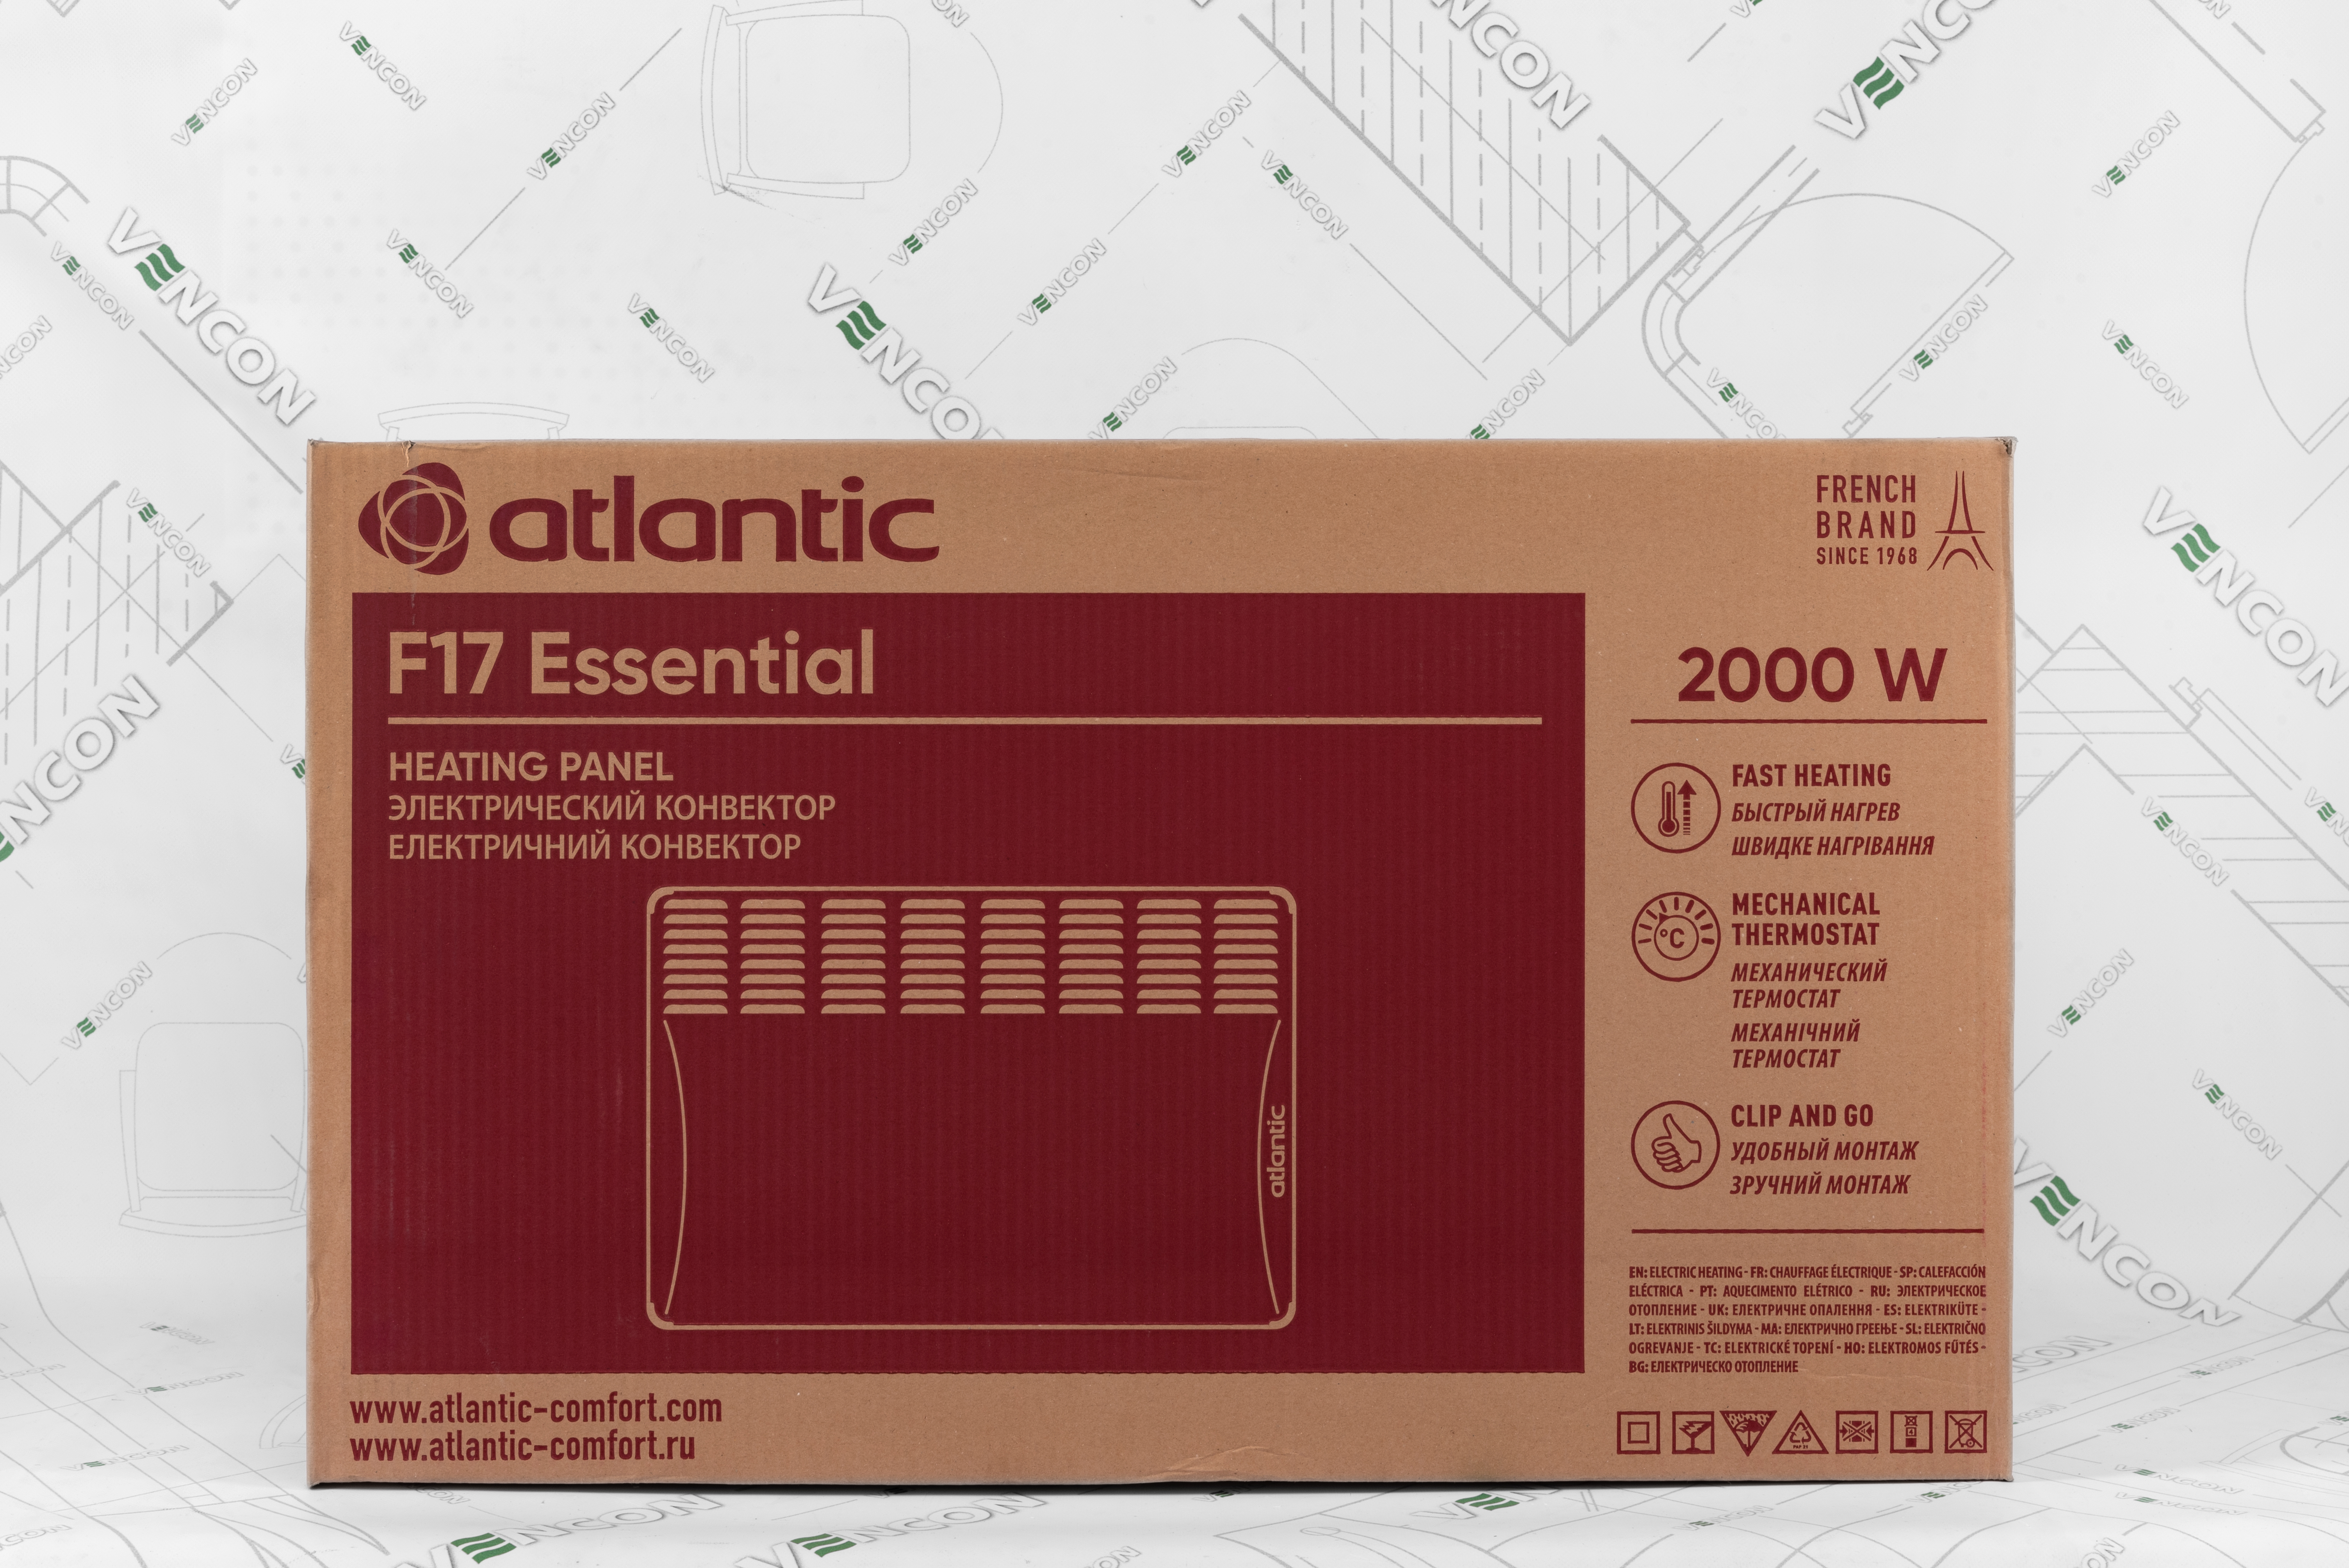 Електричний конвектор Atlantic F17 Essential CMG BL-meca 2000 огляд - фото 11